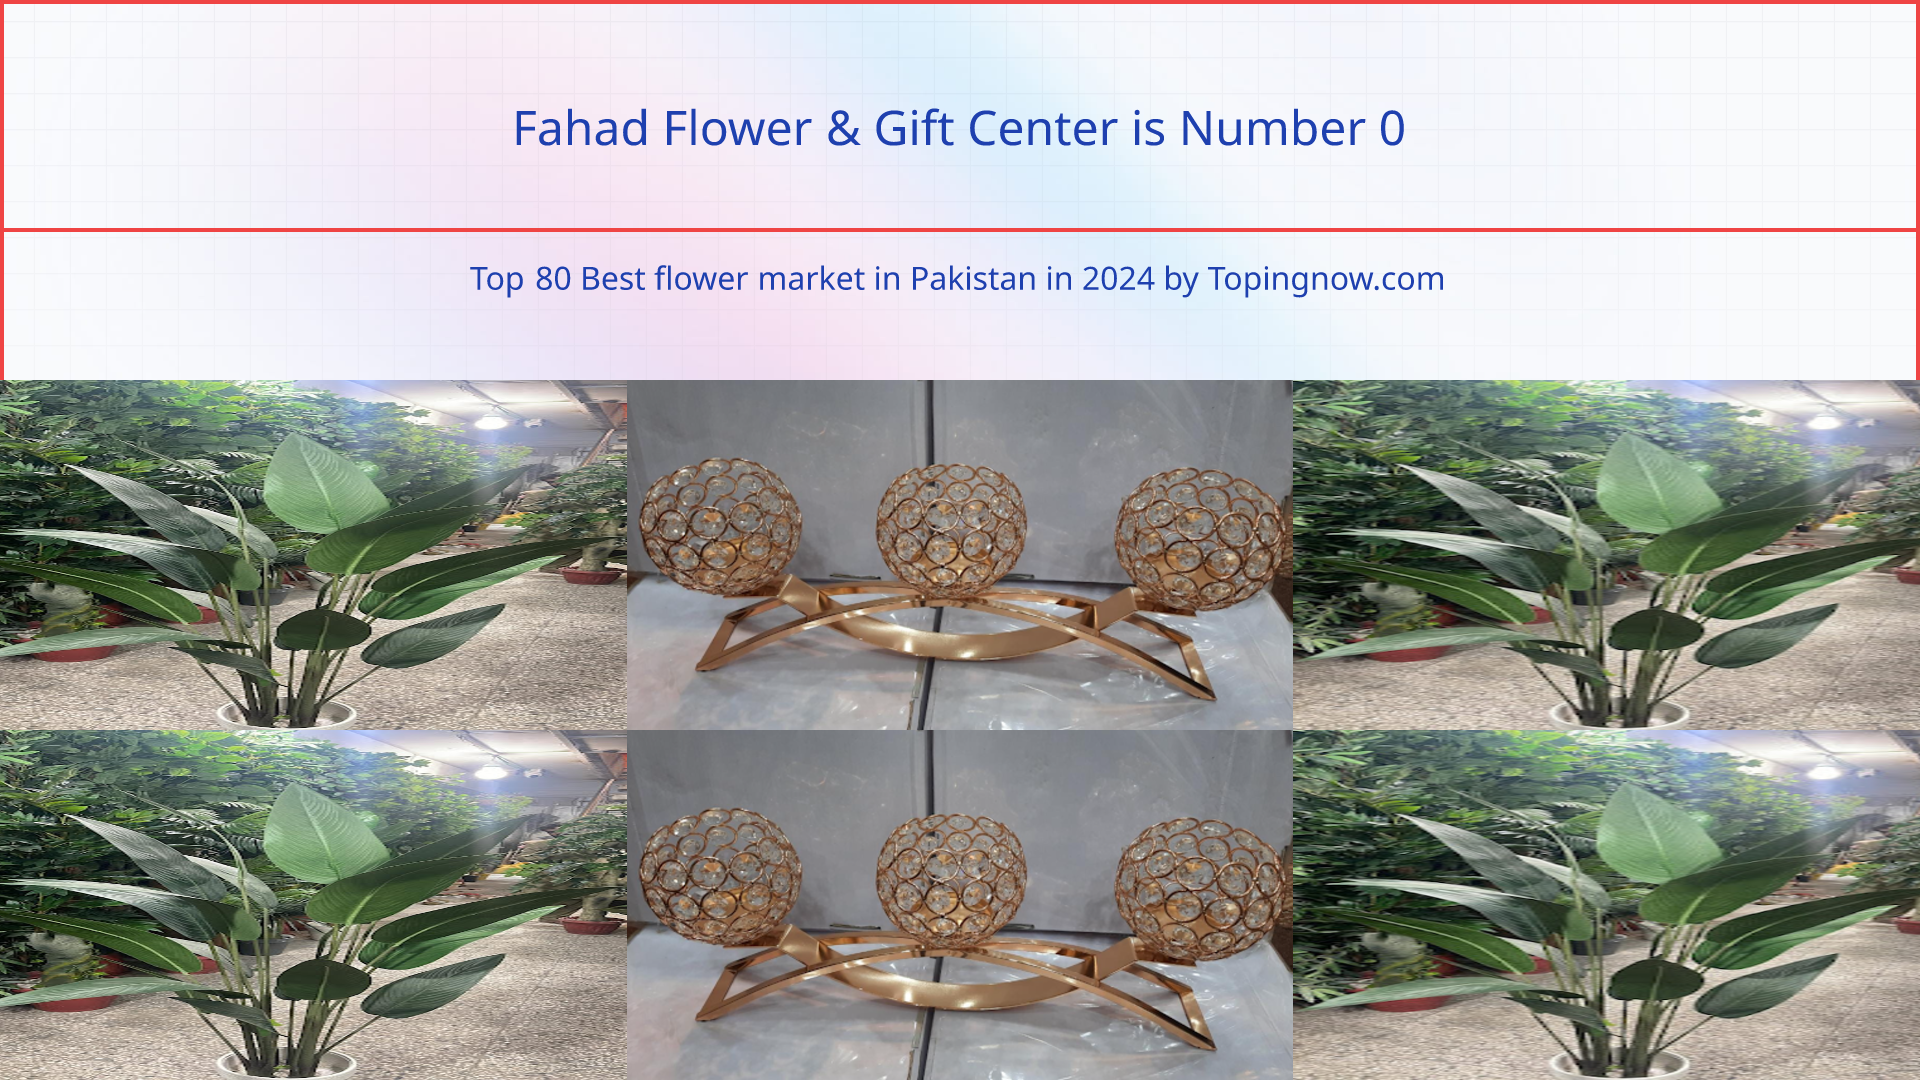 Fahad Flower & Gift Center: Top 80 Best flower market in Pakistan in 2024